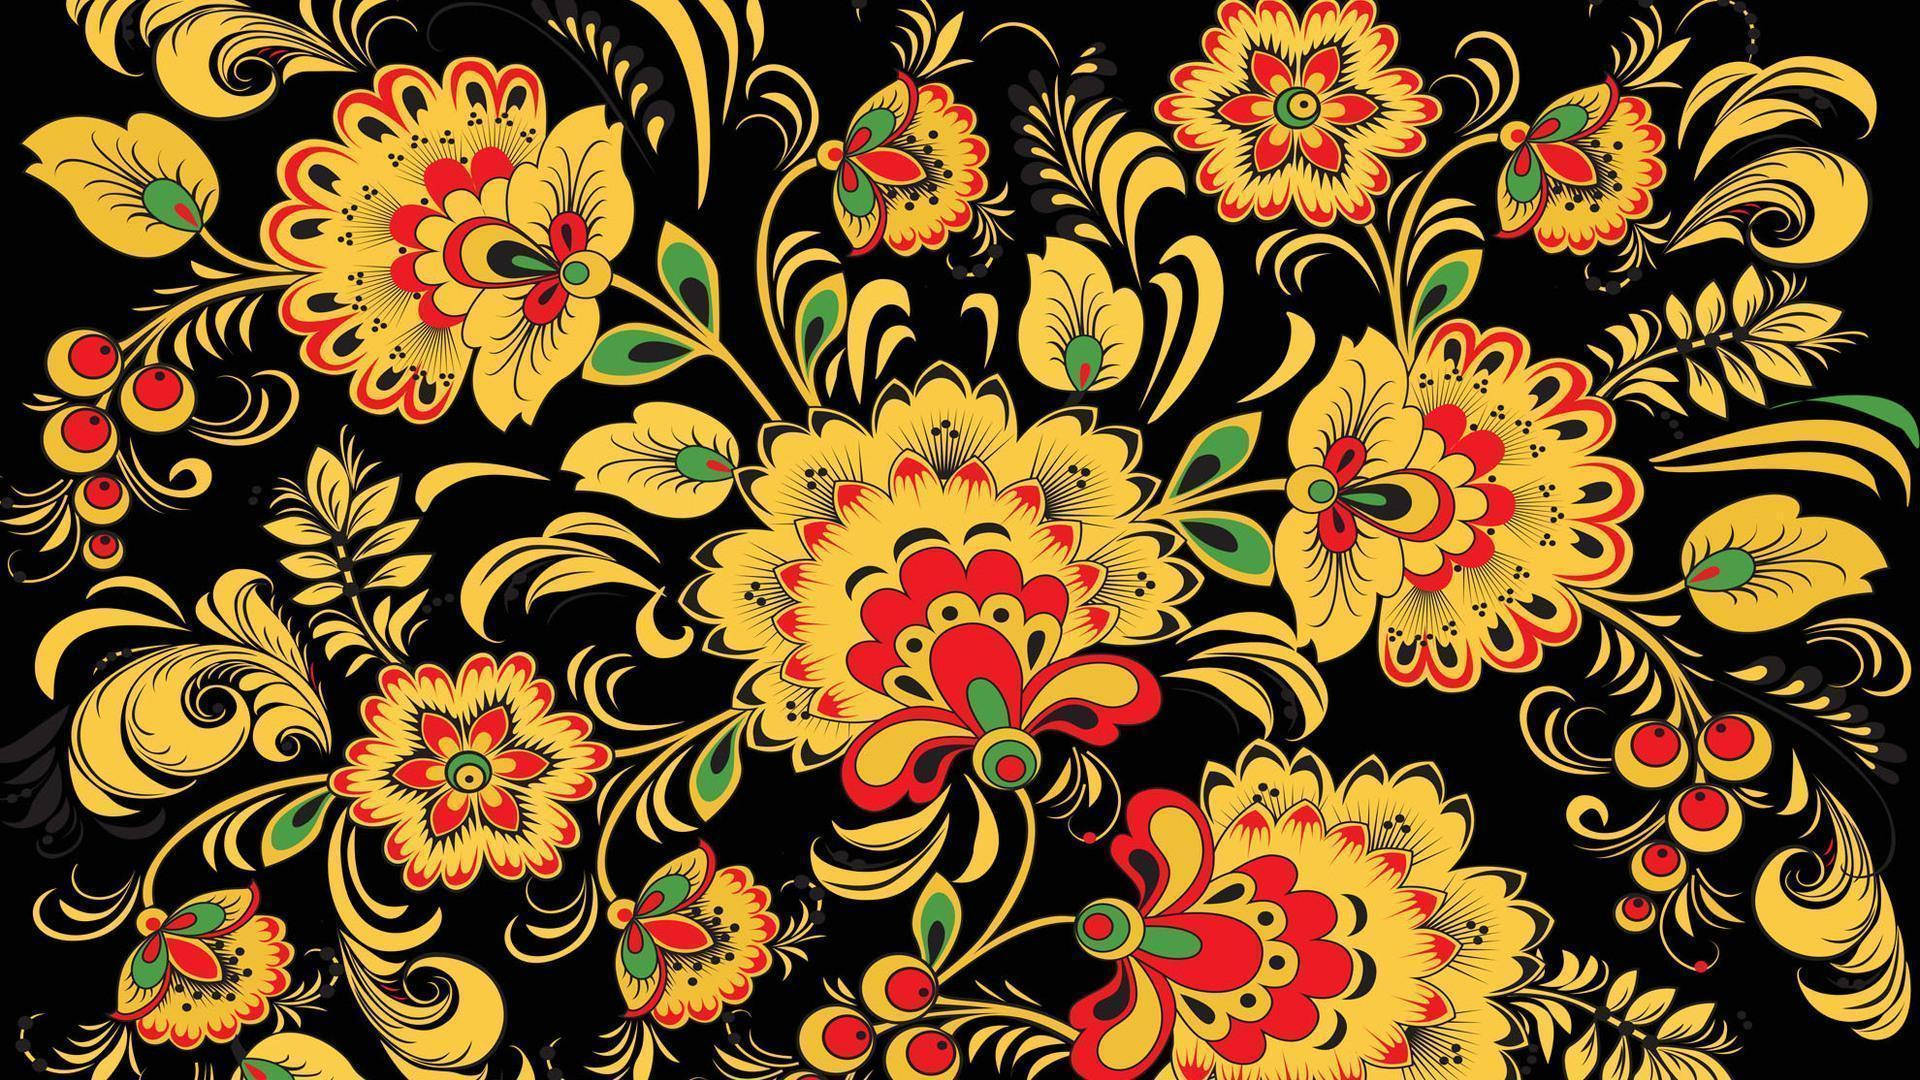 Authentic Russian Yellow Flowered Folk Art Display